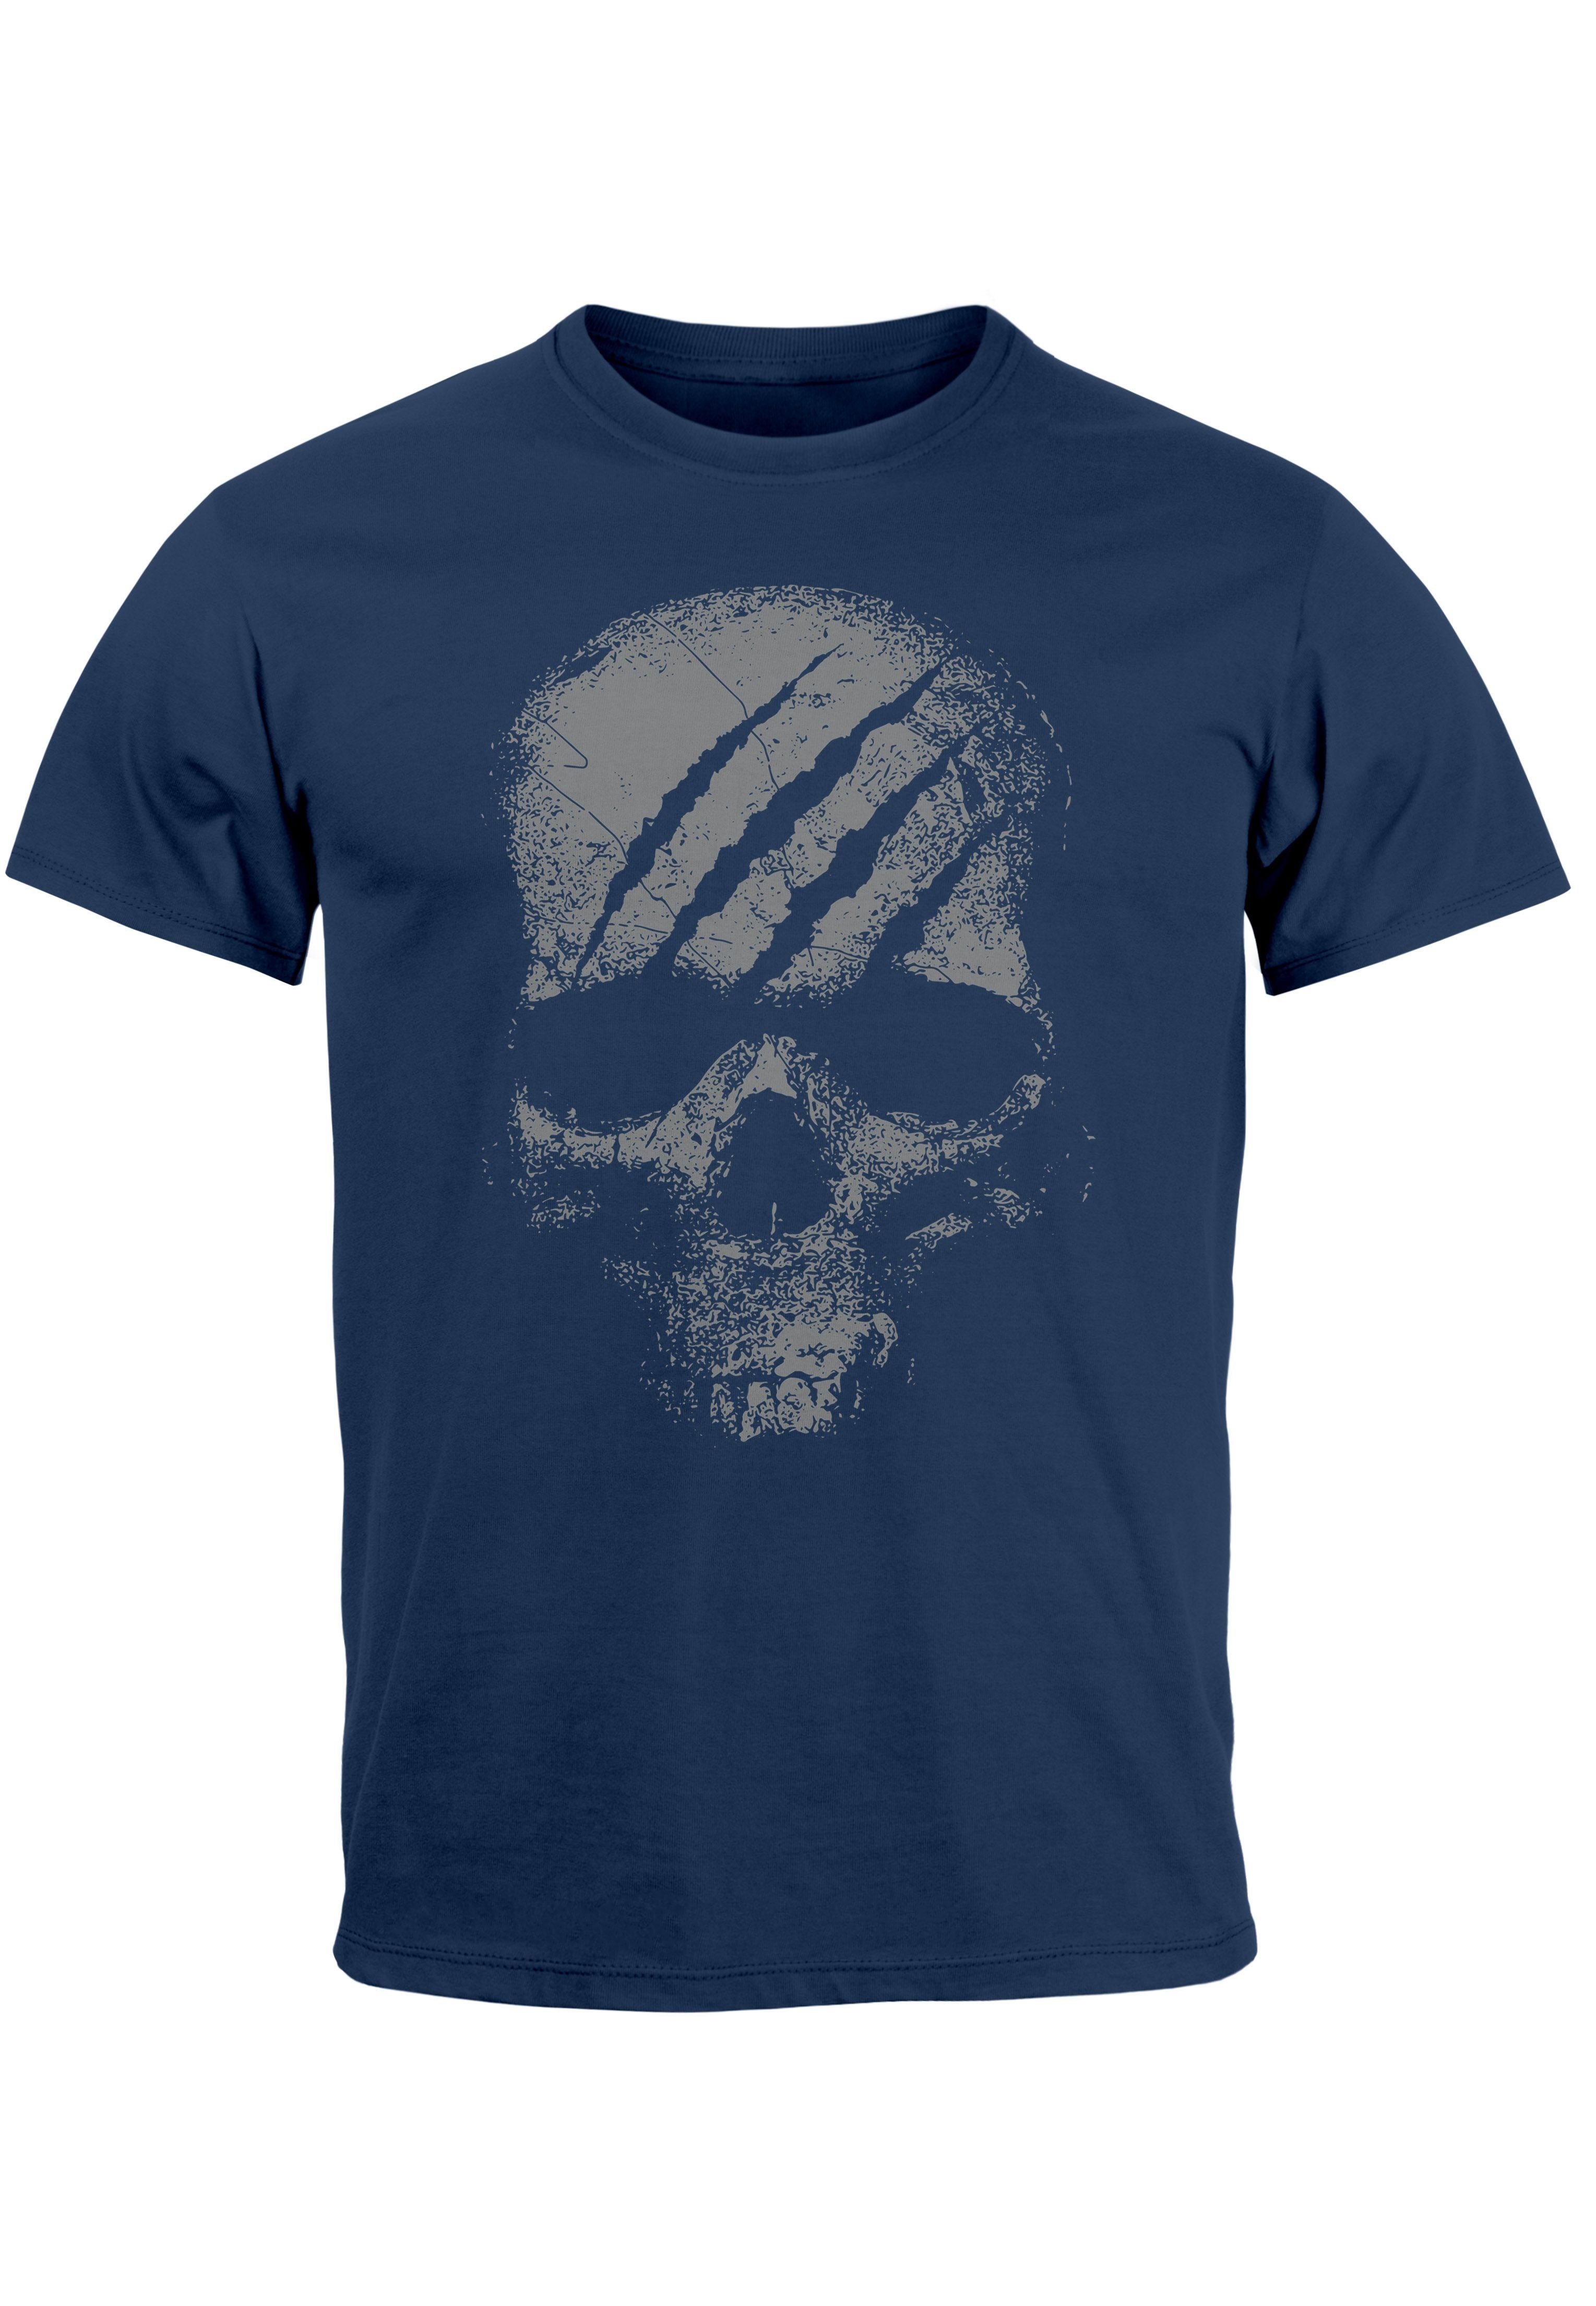 Neverless Print-Shirt Herren T-Shirt Totenkopf Skull Totenschädel Skelett Print Aufdruck Fas mit Print navy